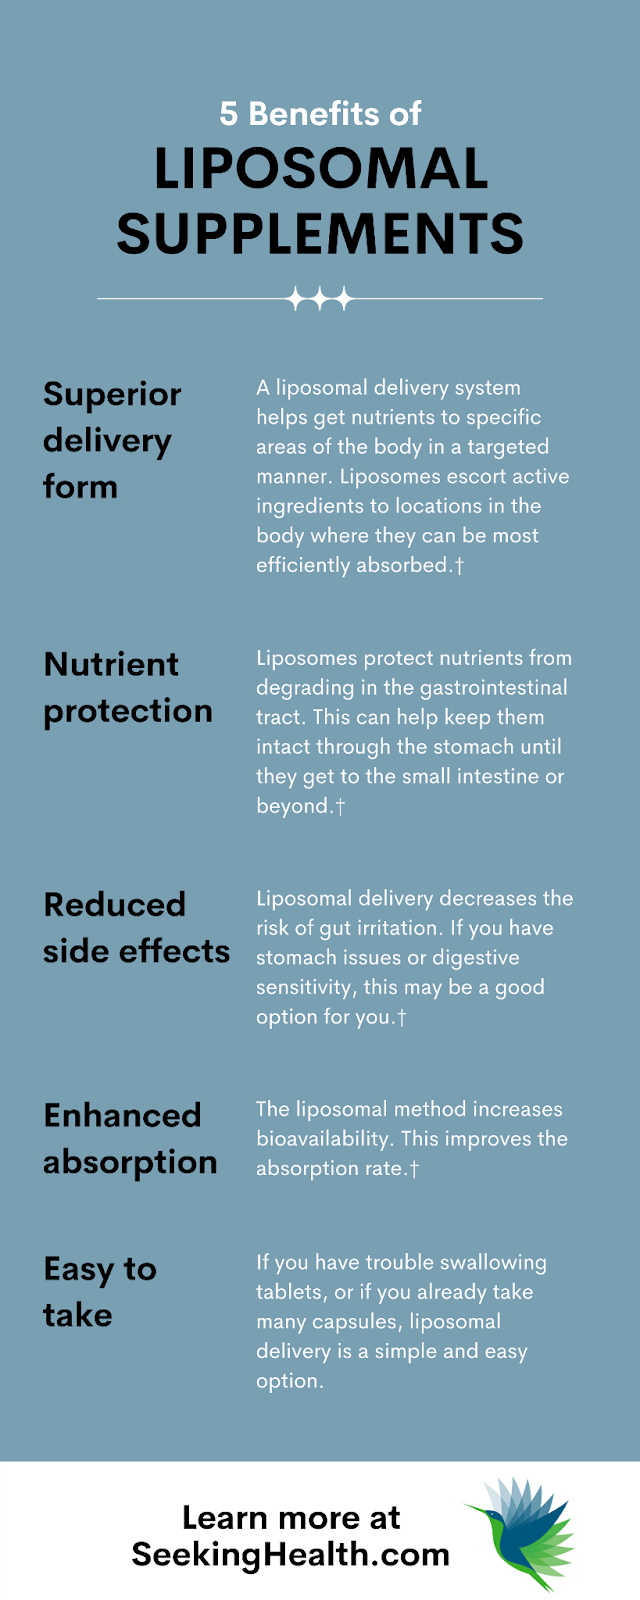 5 Benefits of Liposomal Supplements